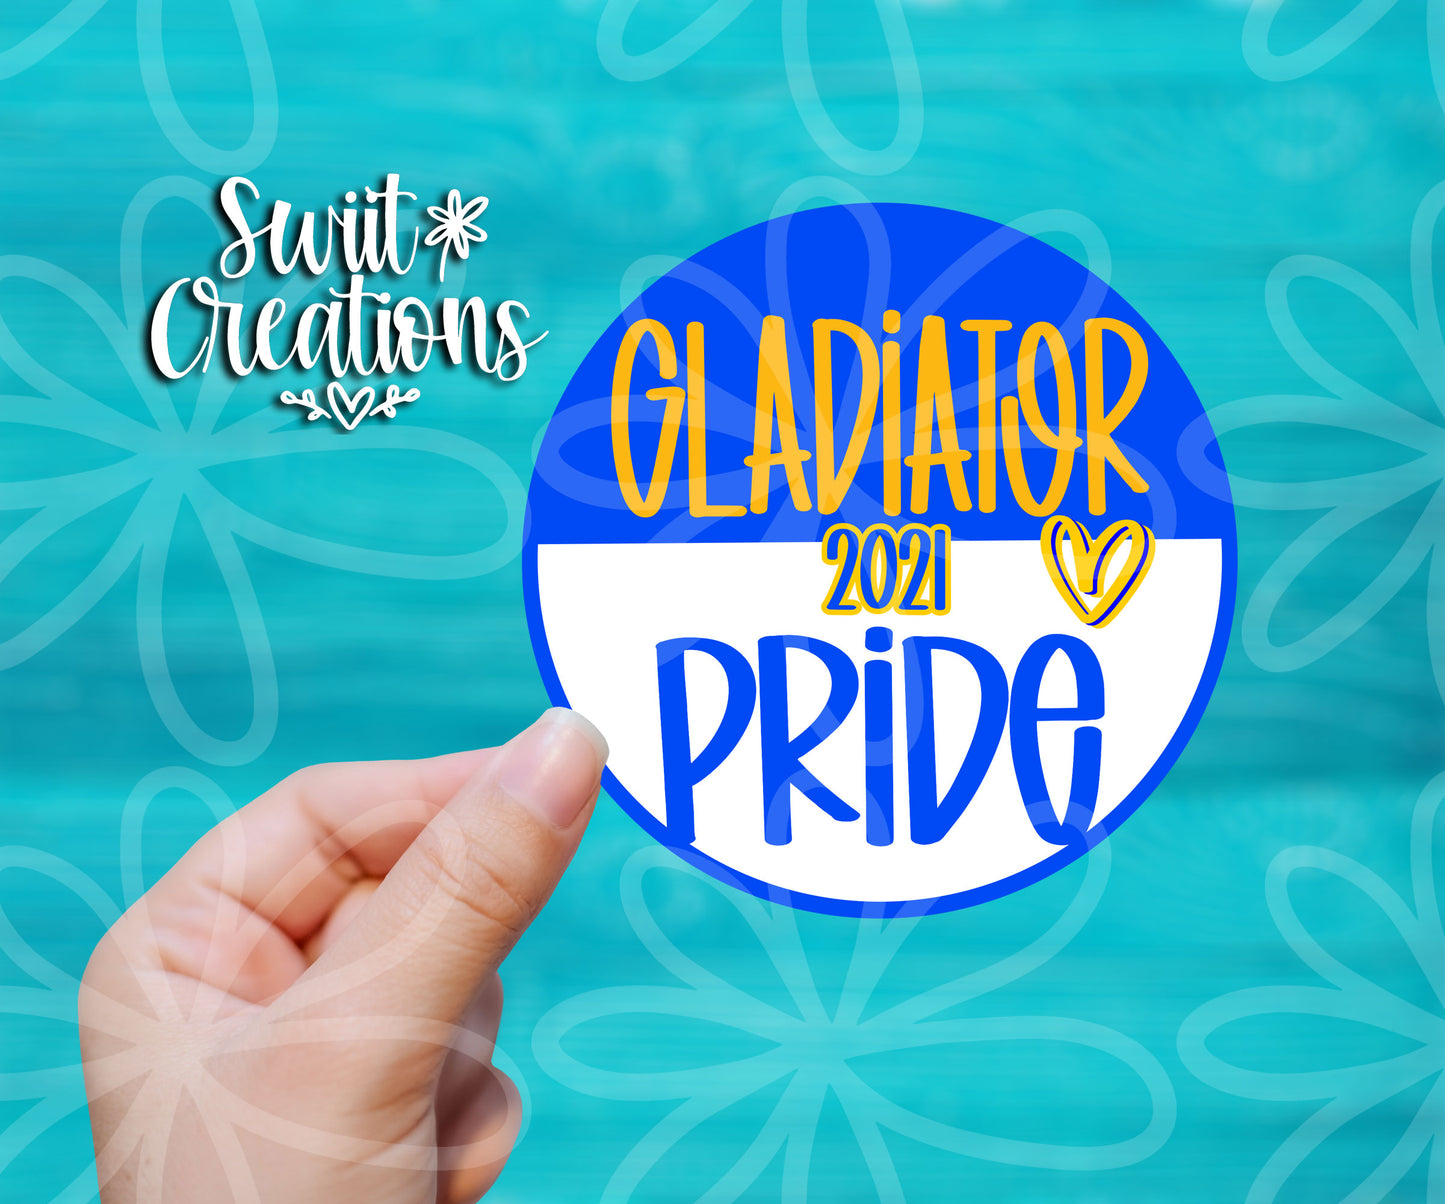 Gladiator Pride 2021 Waterproof Sticker  (SS249)